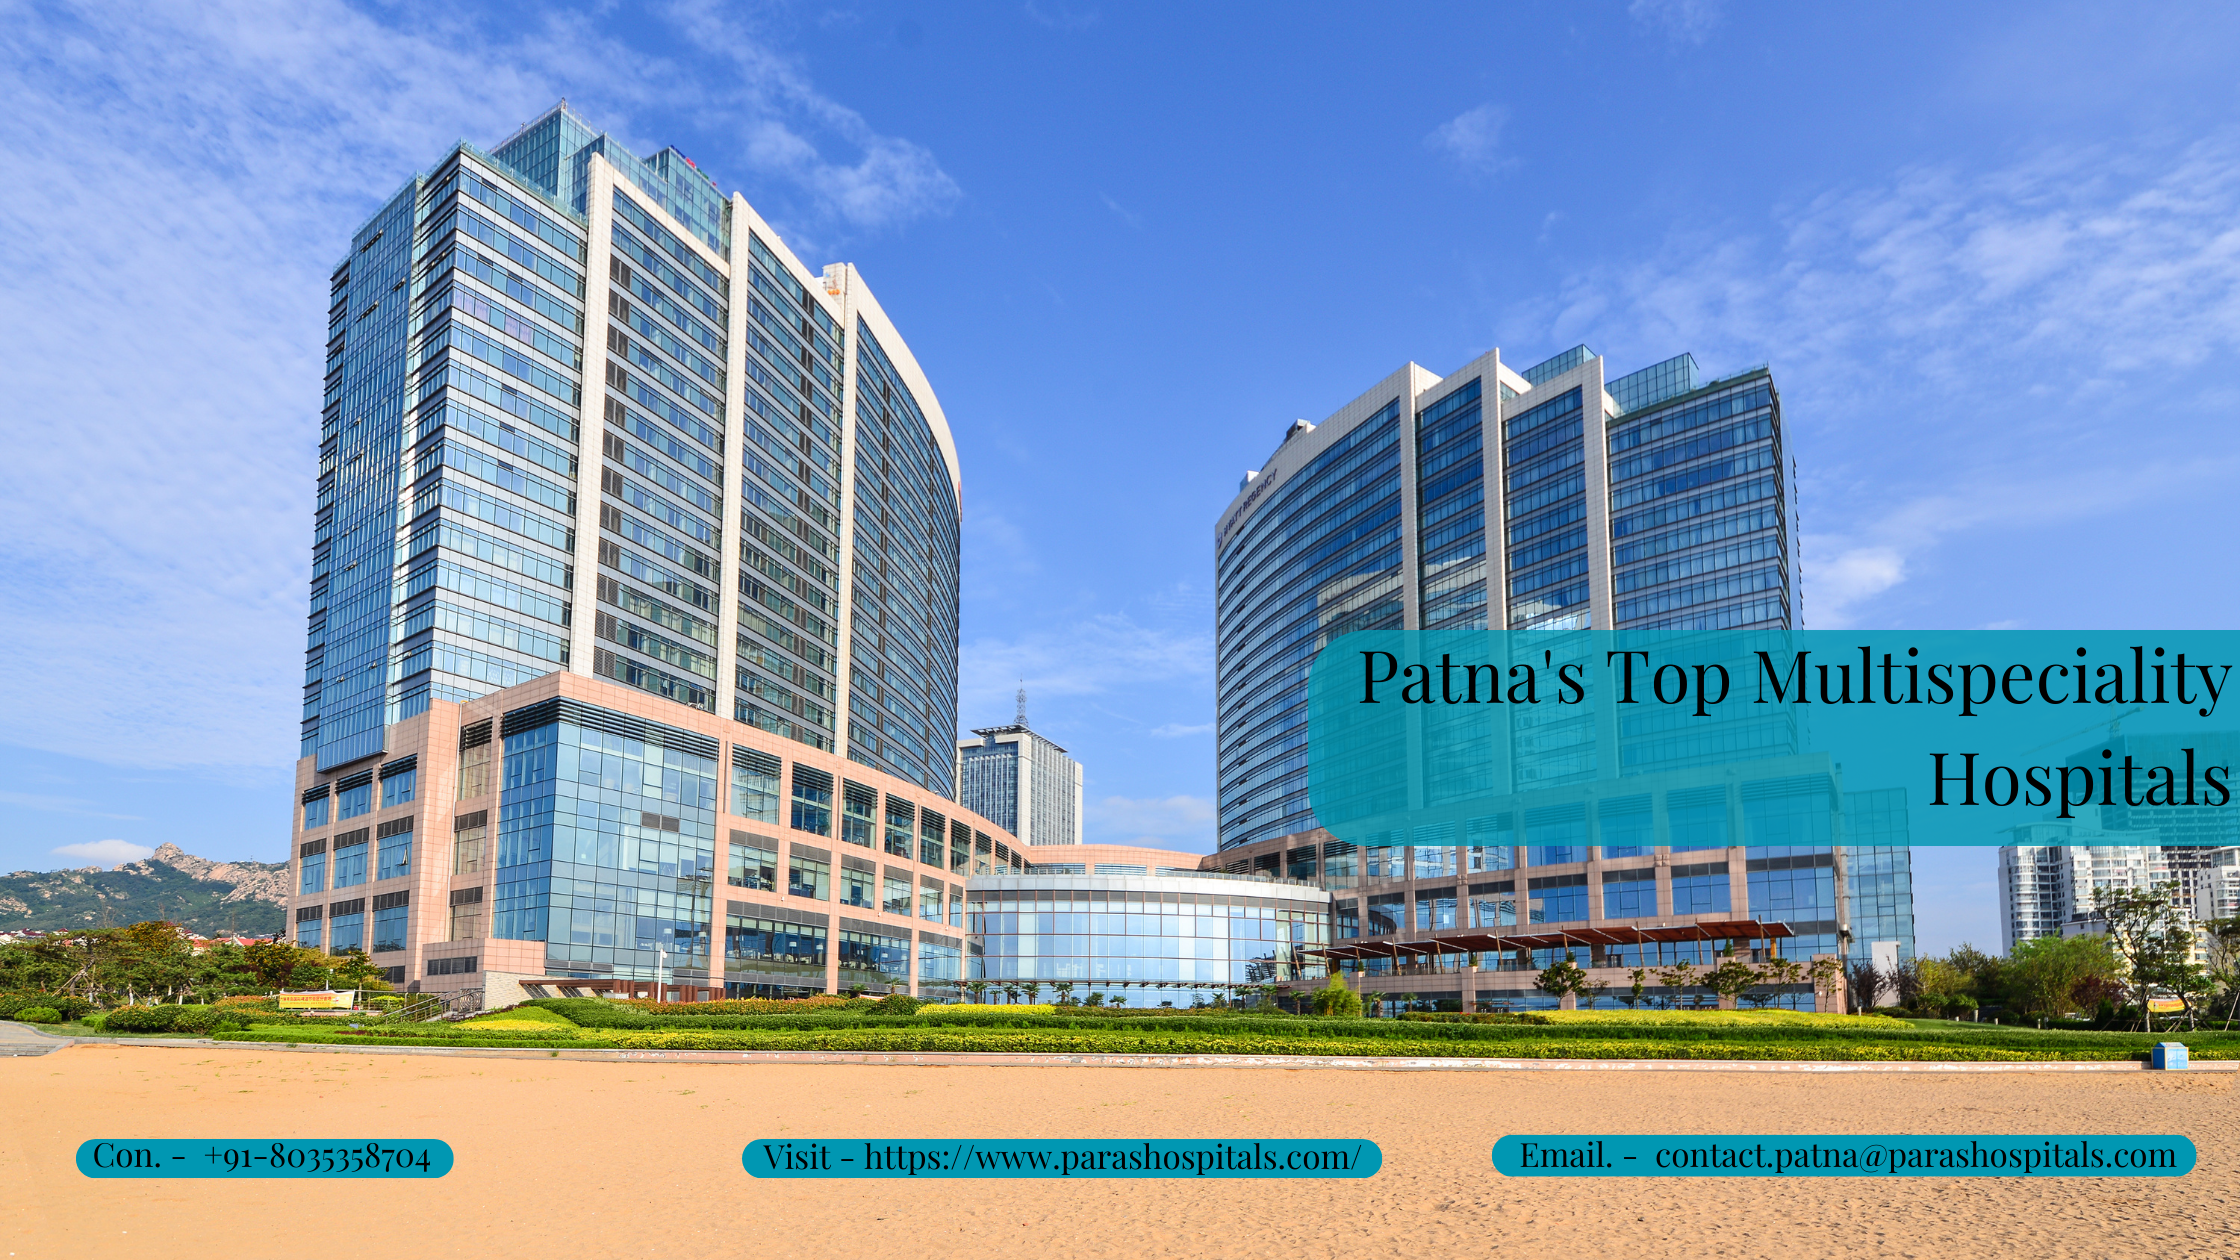 Patna’s Top Multispeciality Hospitals